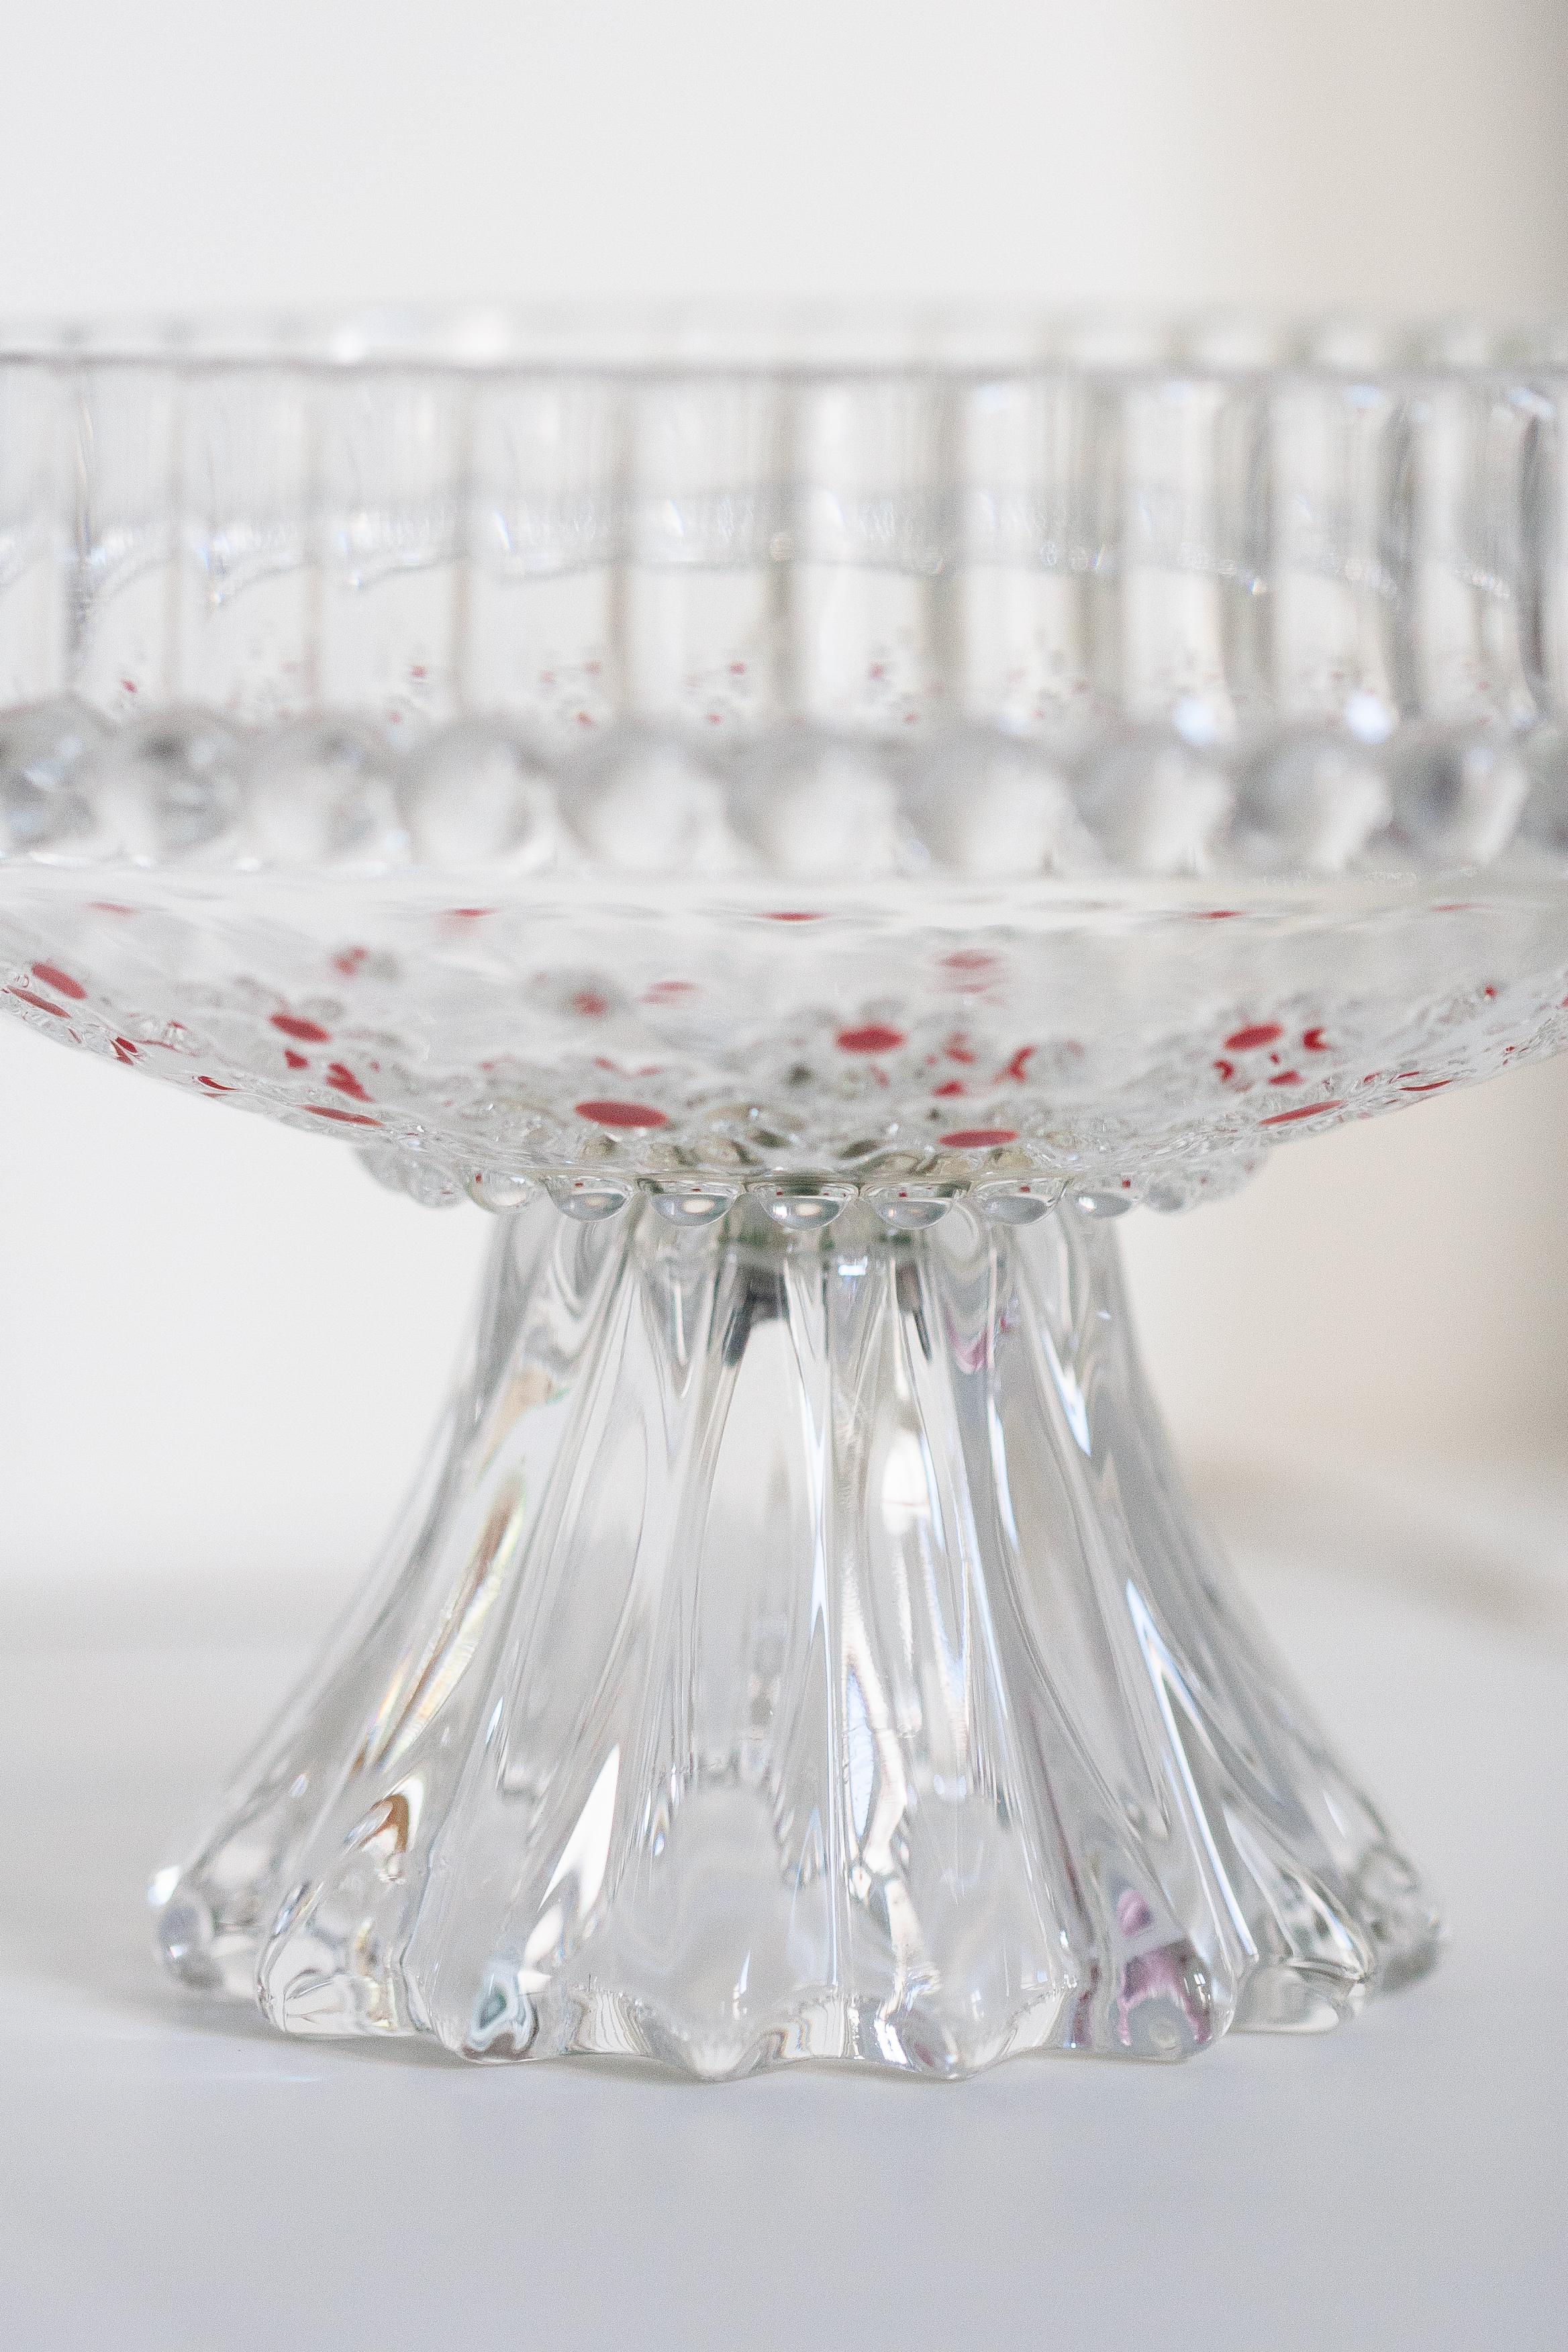 Transparenter dekorativer Kristallglasteller im Vintage-Stil, Italien, 1960er Jahre (Keramik) im Angebot